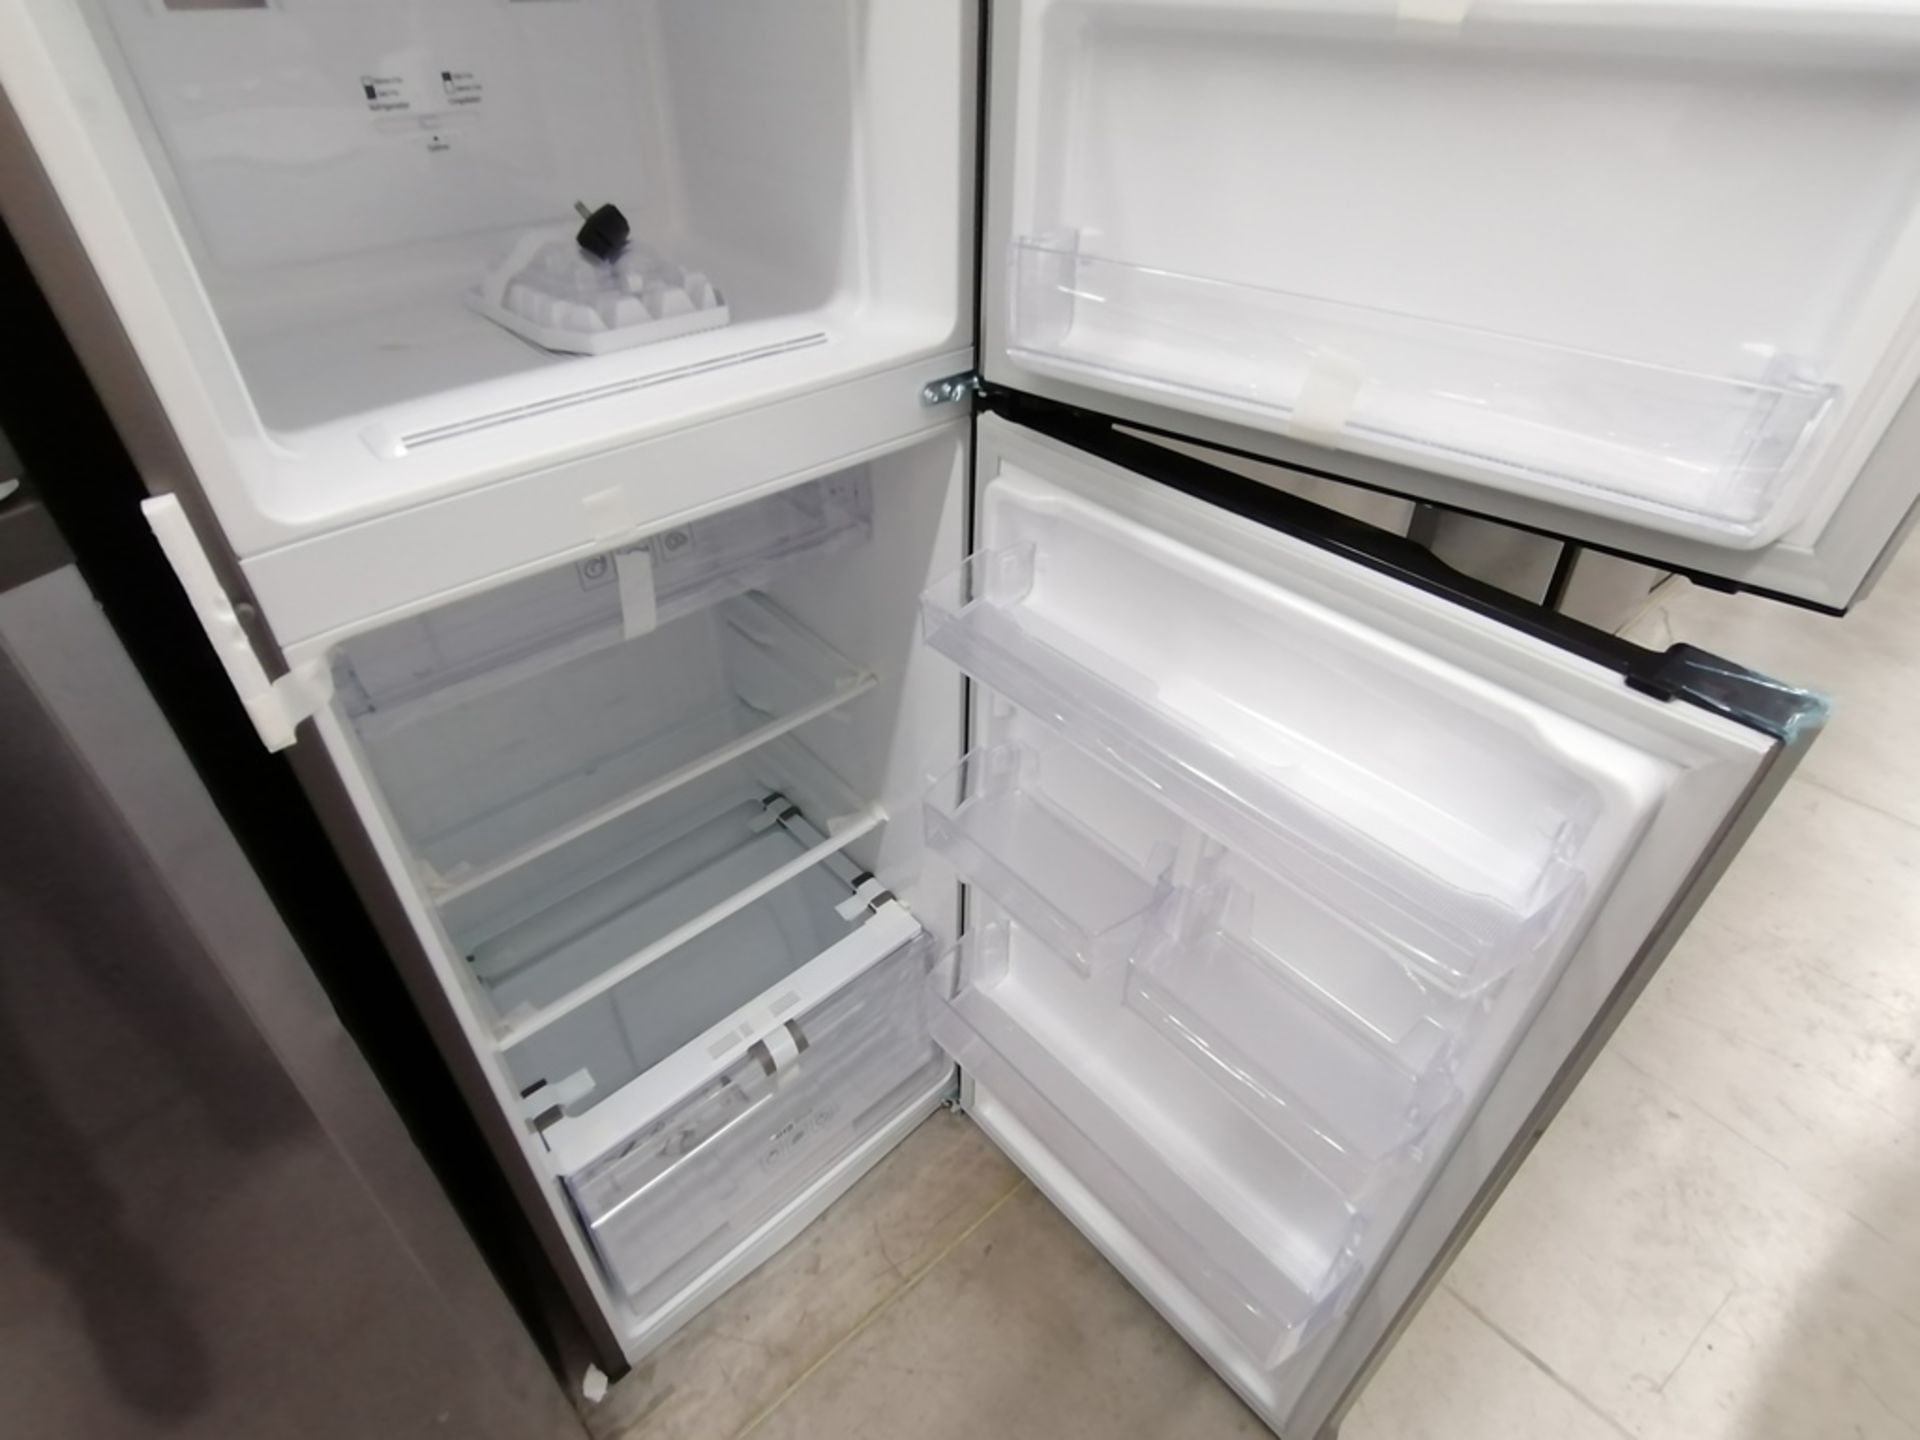 Lote de 2 refrigeradores incluye: 1 Refrigerador, Marca Samsung, Modelo RT29K500JS8, Serie 0AZS4BAR - Image 5 of 15